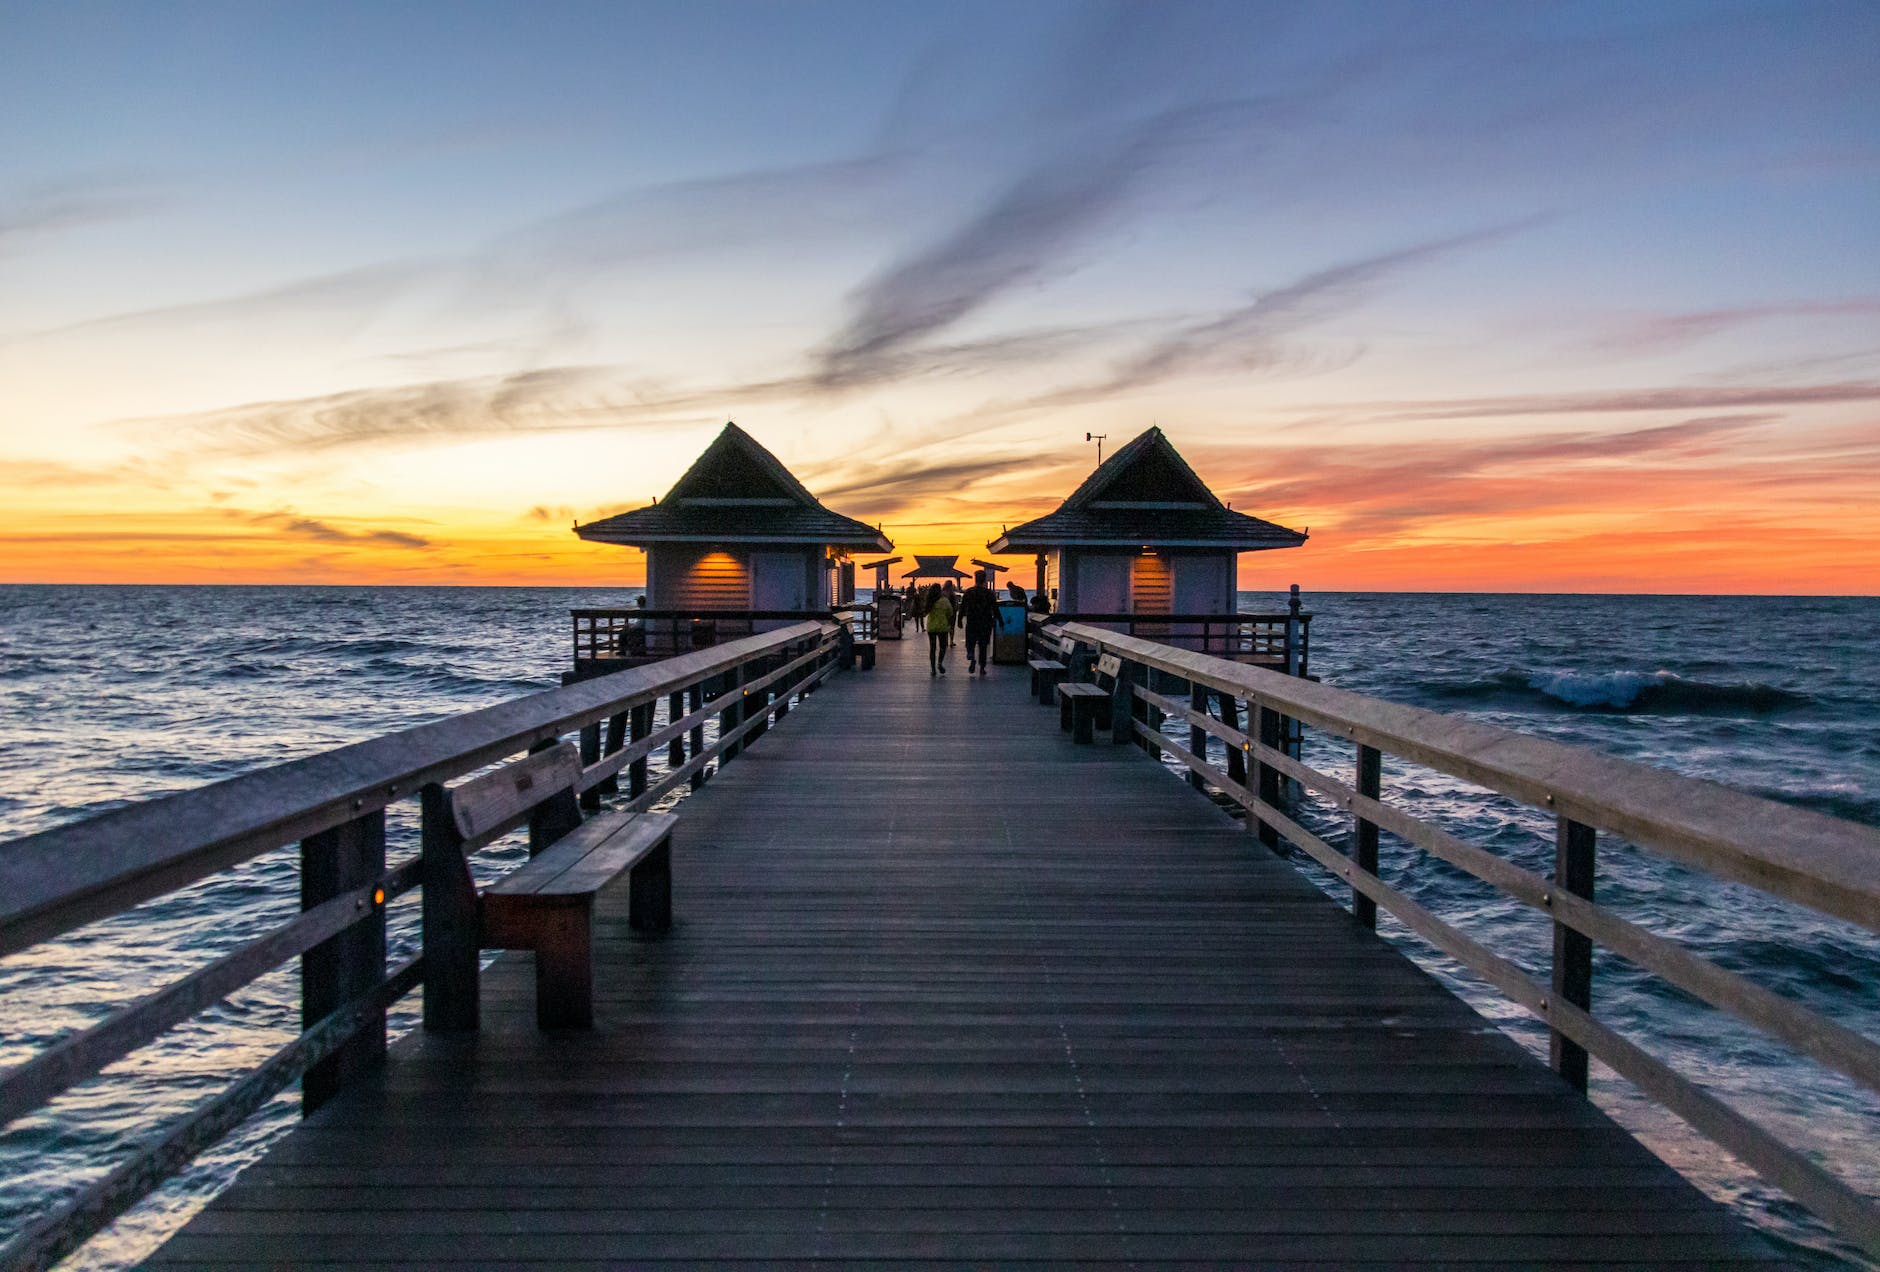 pier at sunset - Michigan vacationing in Florida